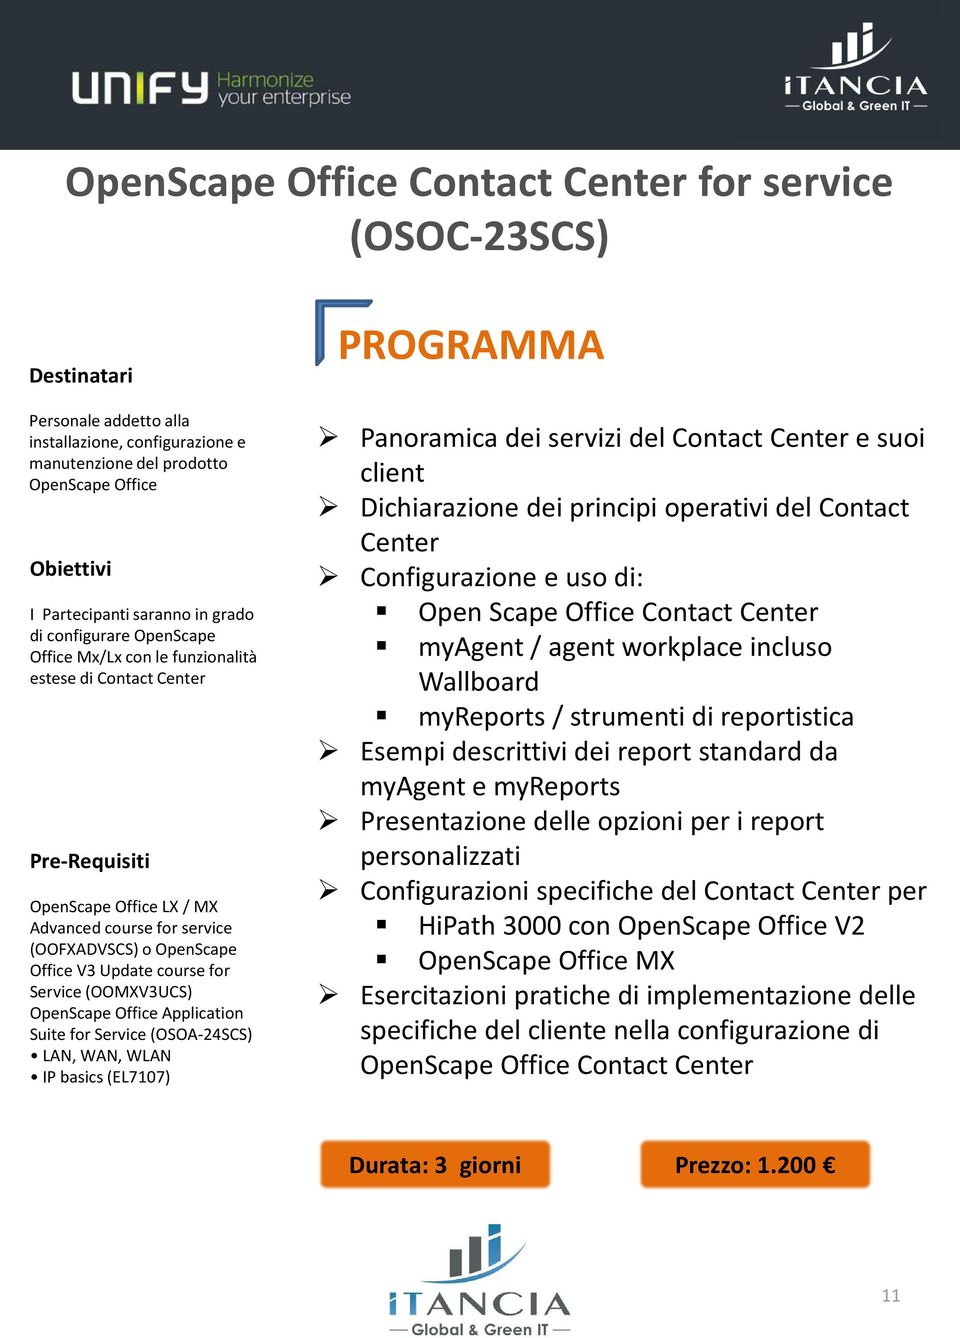 course for Service (OOMXV3UCS) OpenScapeOffice Application Suite for Service (OSOA-24SCS) LAN, WAN, WLAN IP basics(el7107) PROGRAMMA Panoramica dei servizi del ContactCenter e suoi client